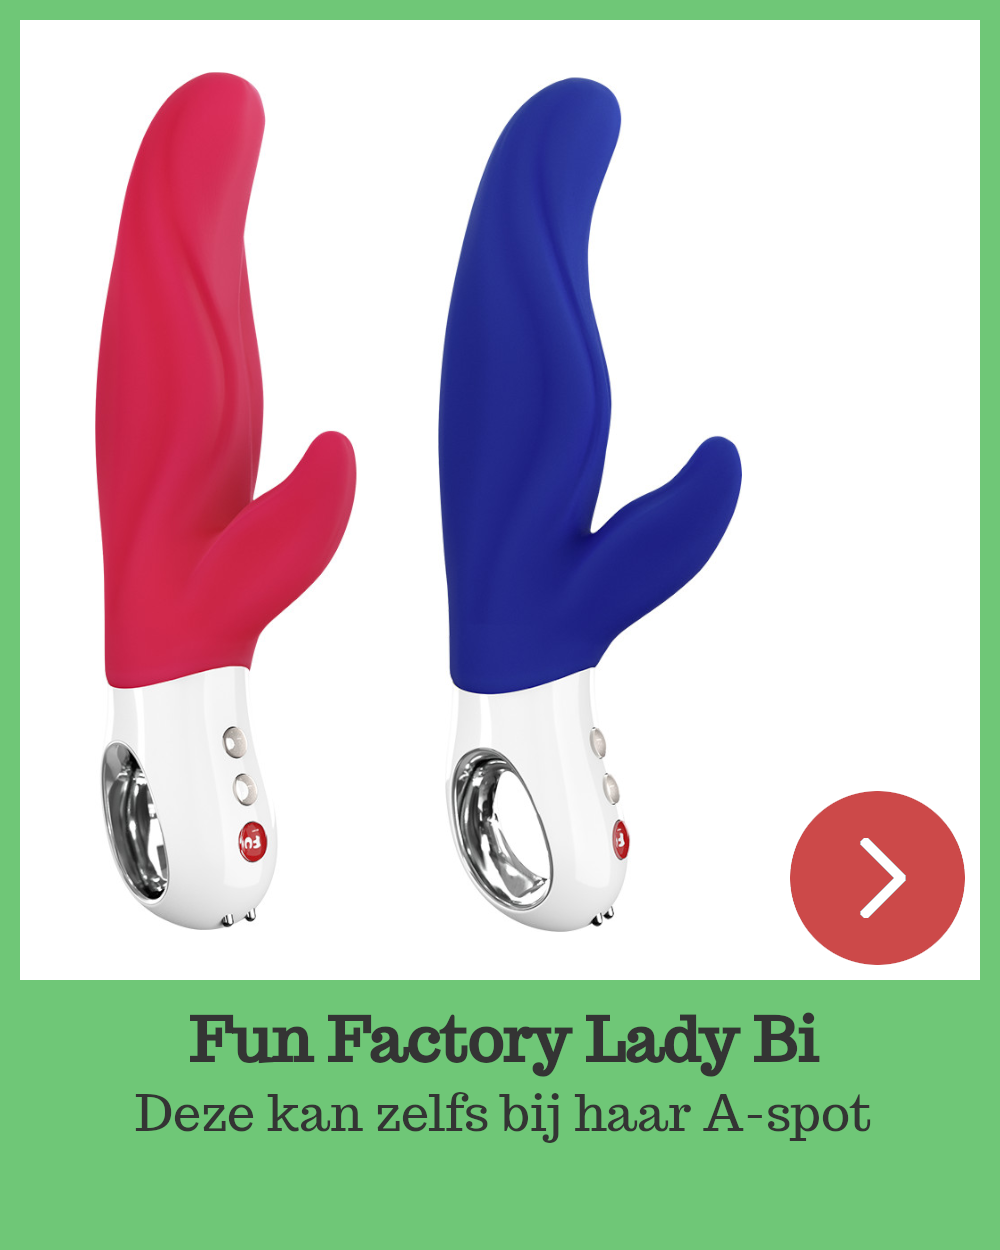 Fun Factory Lady Bi, duovibrator